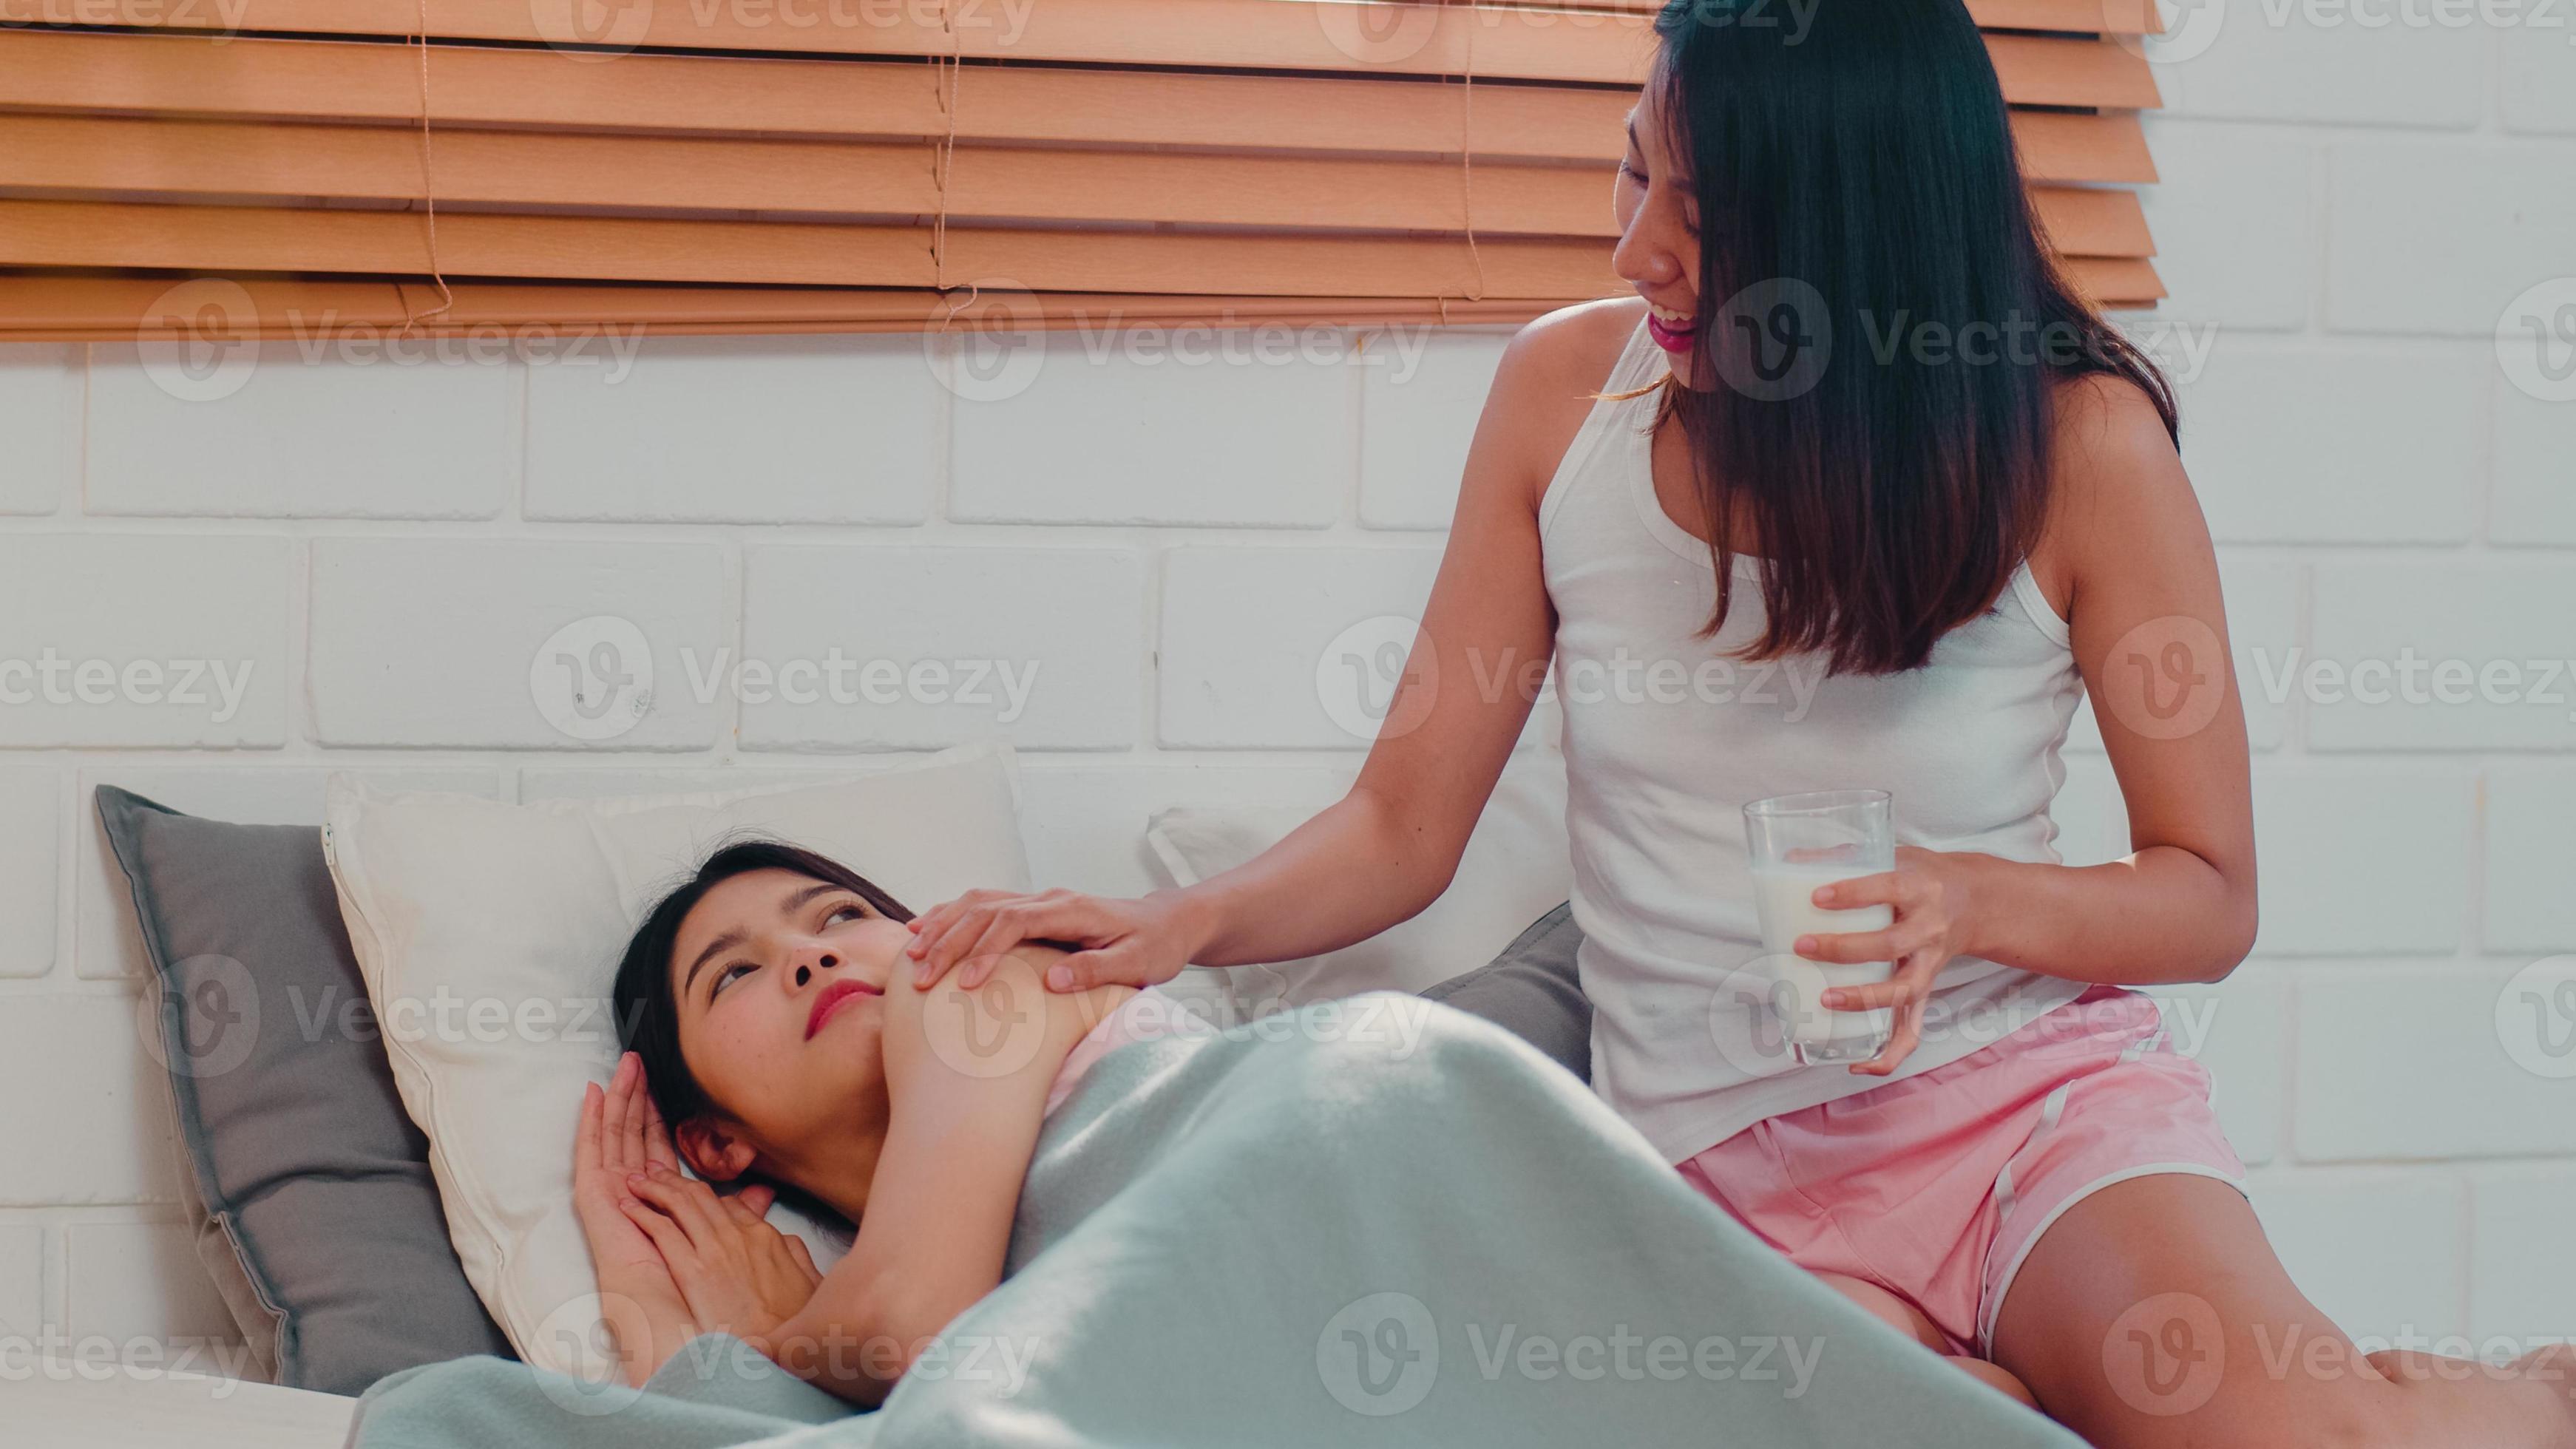 asian lesbian massage